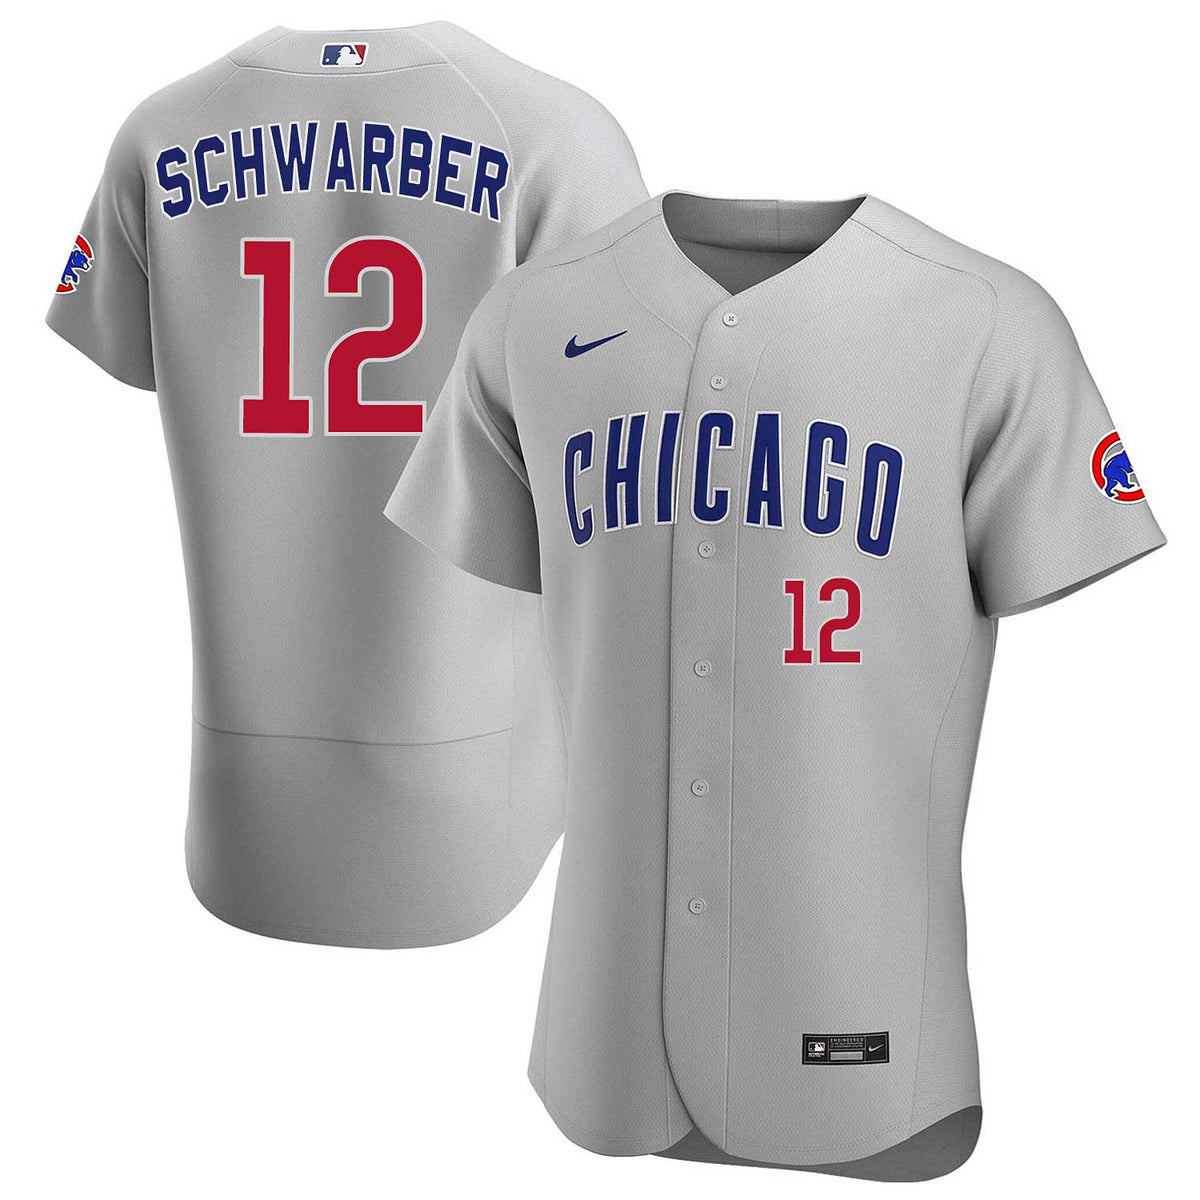 Kyle Schwarber Chicago Cubs Home Baseball Throwback Jersey 